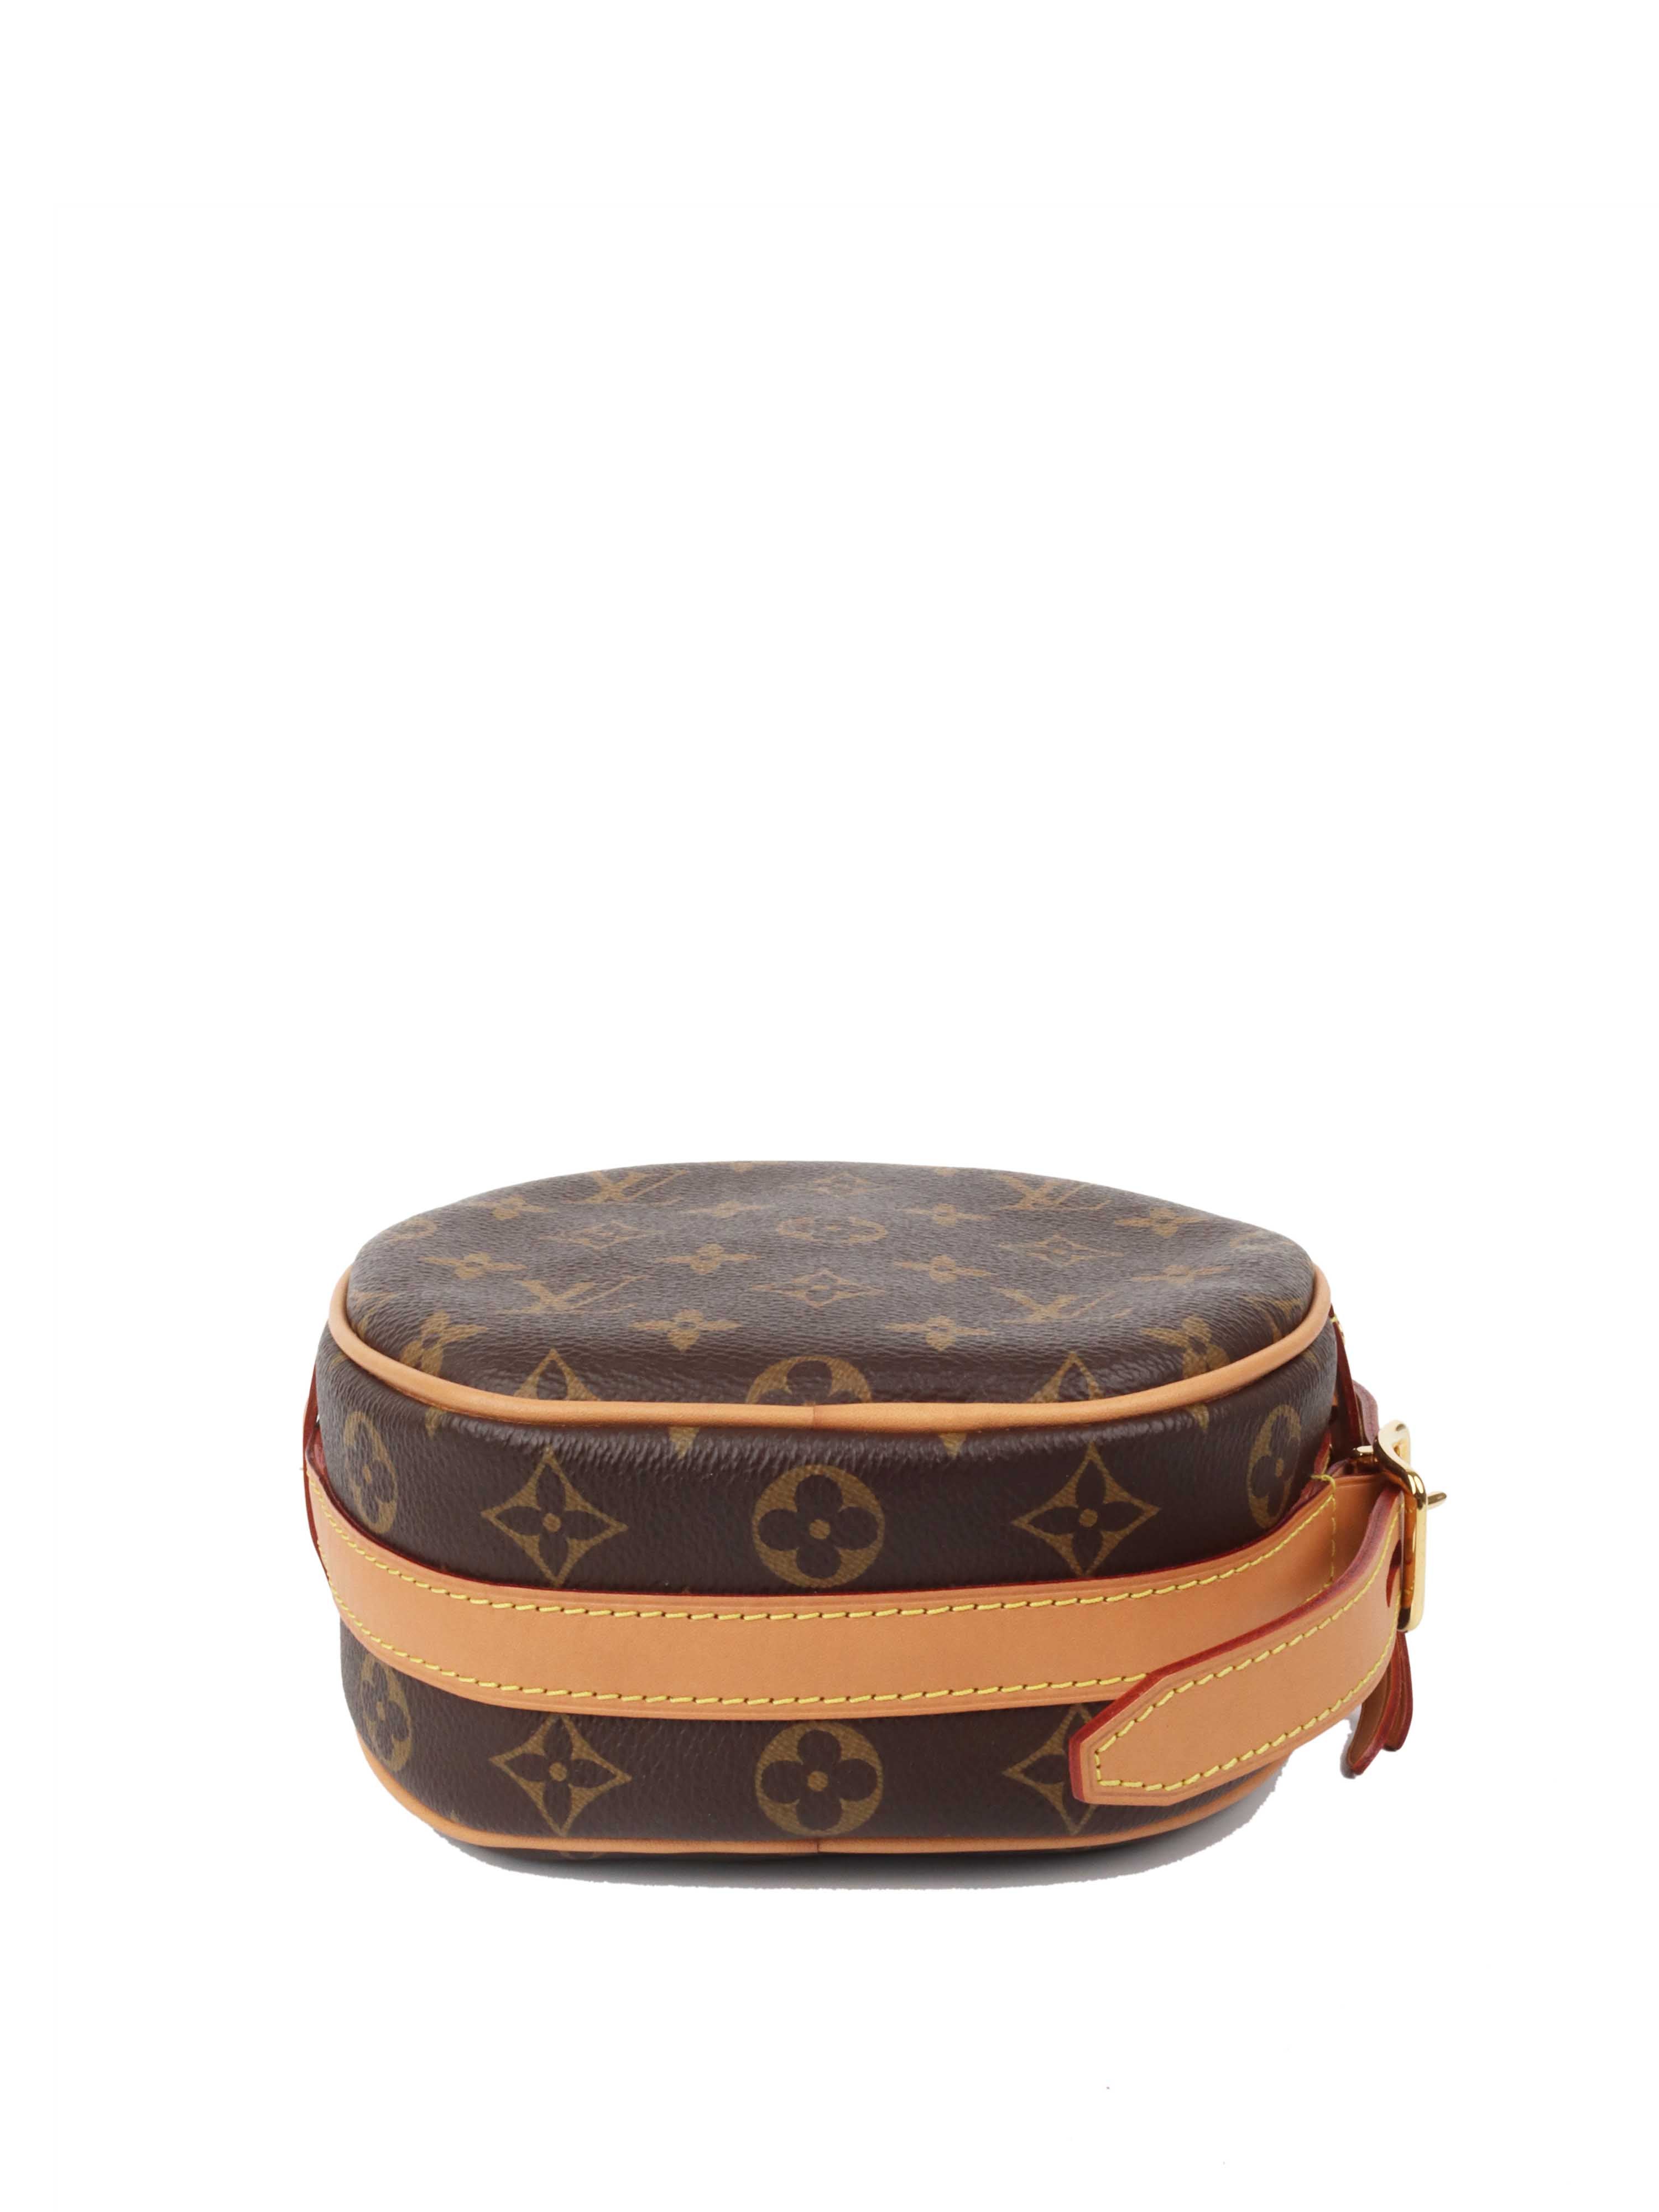 Louis Vuitton Petite Boite Chapeau Bag.